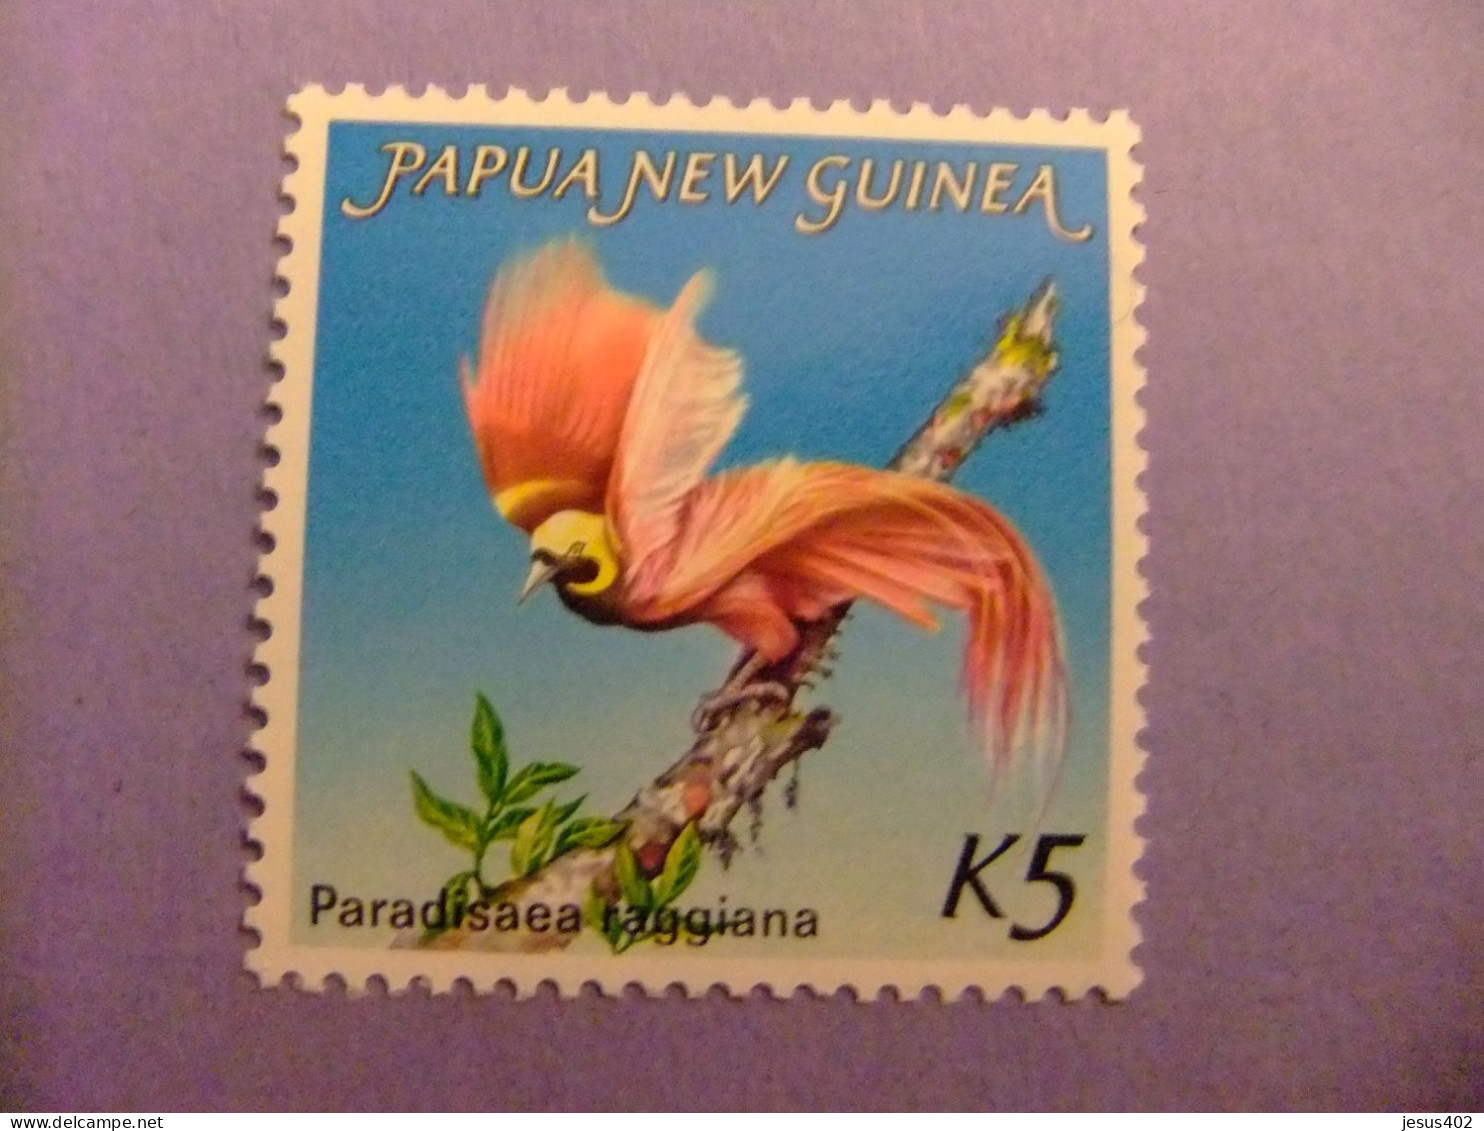 52 PAPUA NEW GUINEA / NUEVA GUINEA 1984 / PARADISAEA RAGGIANA / YVERT 477 MNH - Hühnervögel & Fasanen